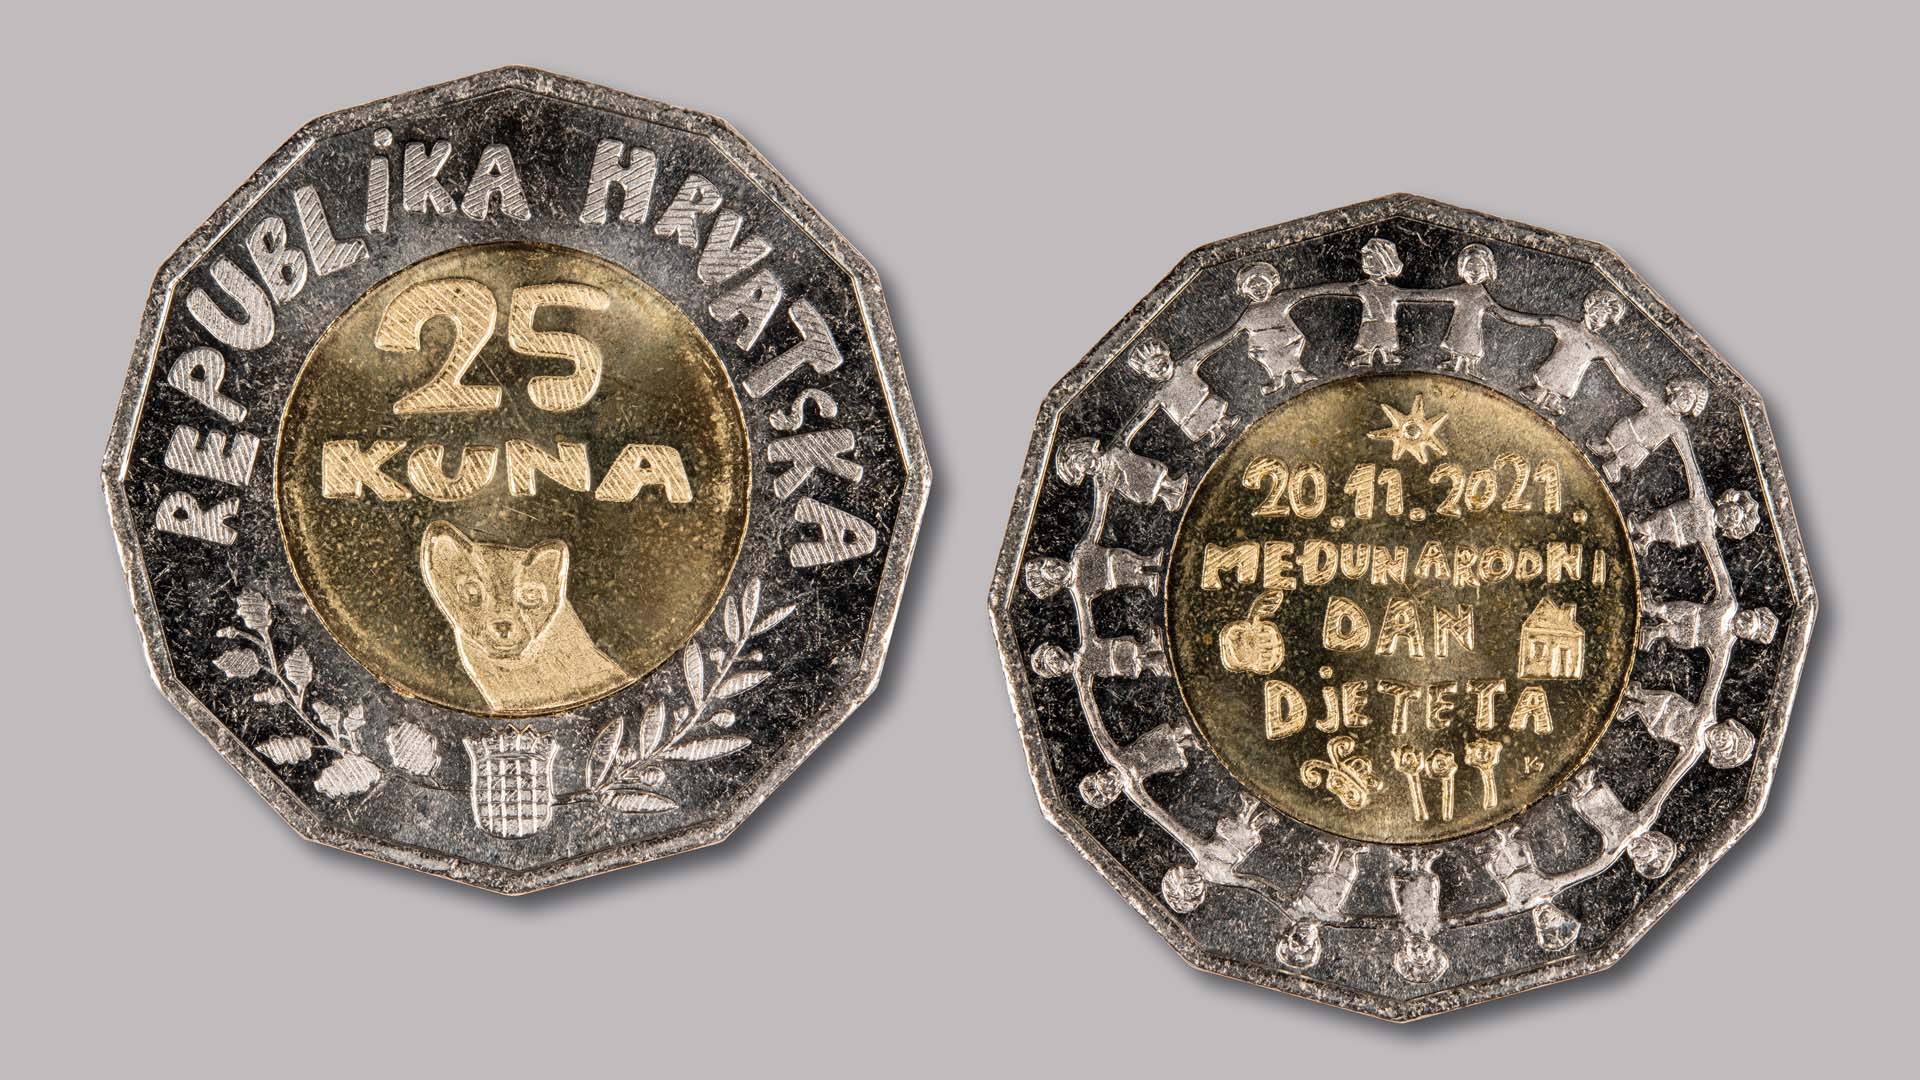 New 25 kuna coin to mark World Children's Day